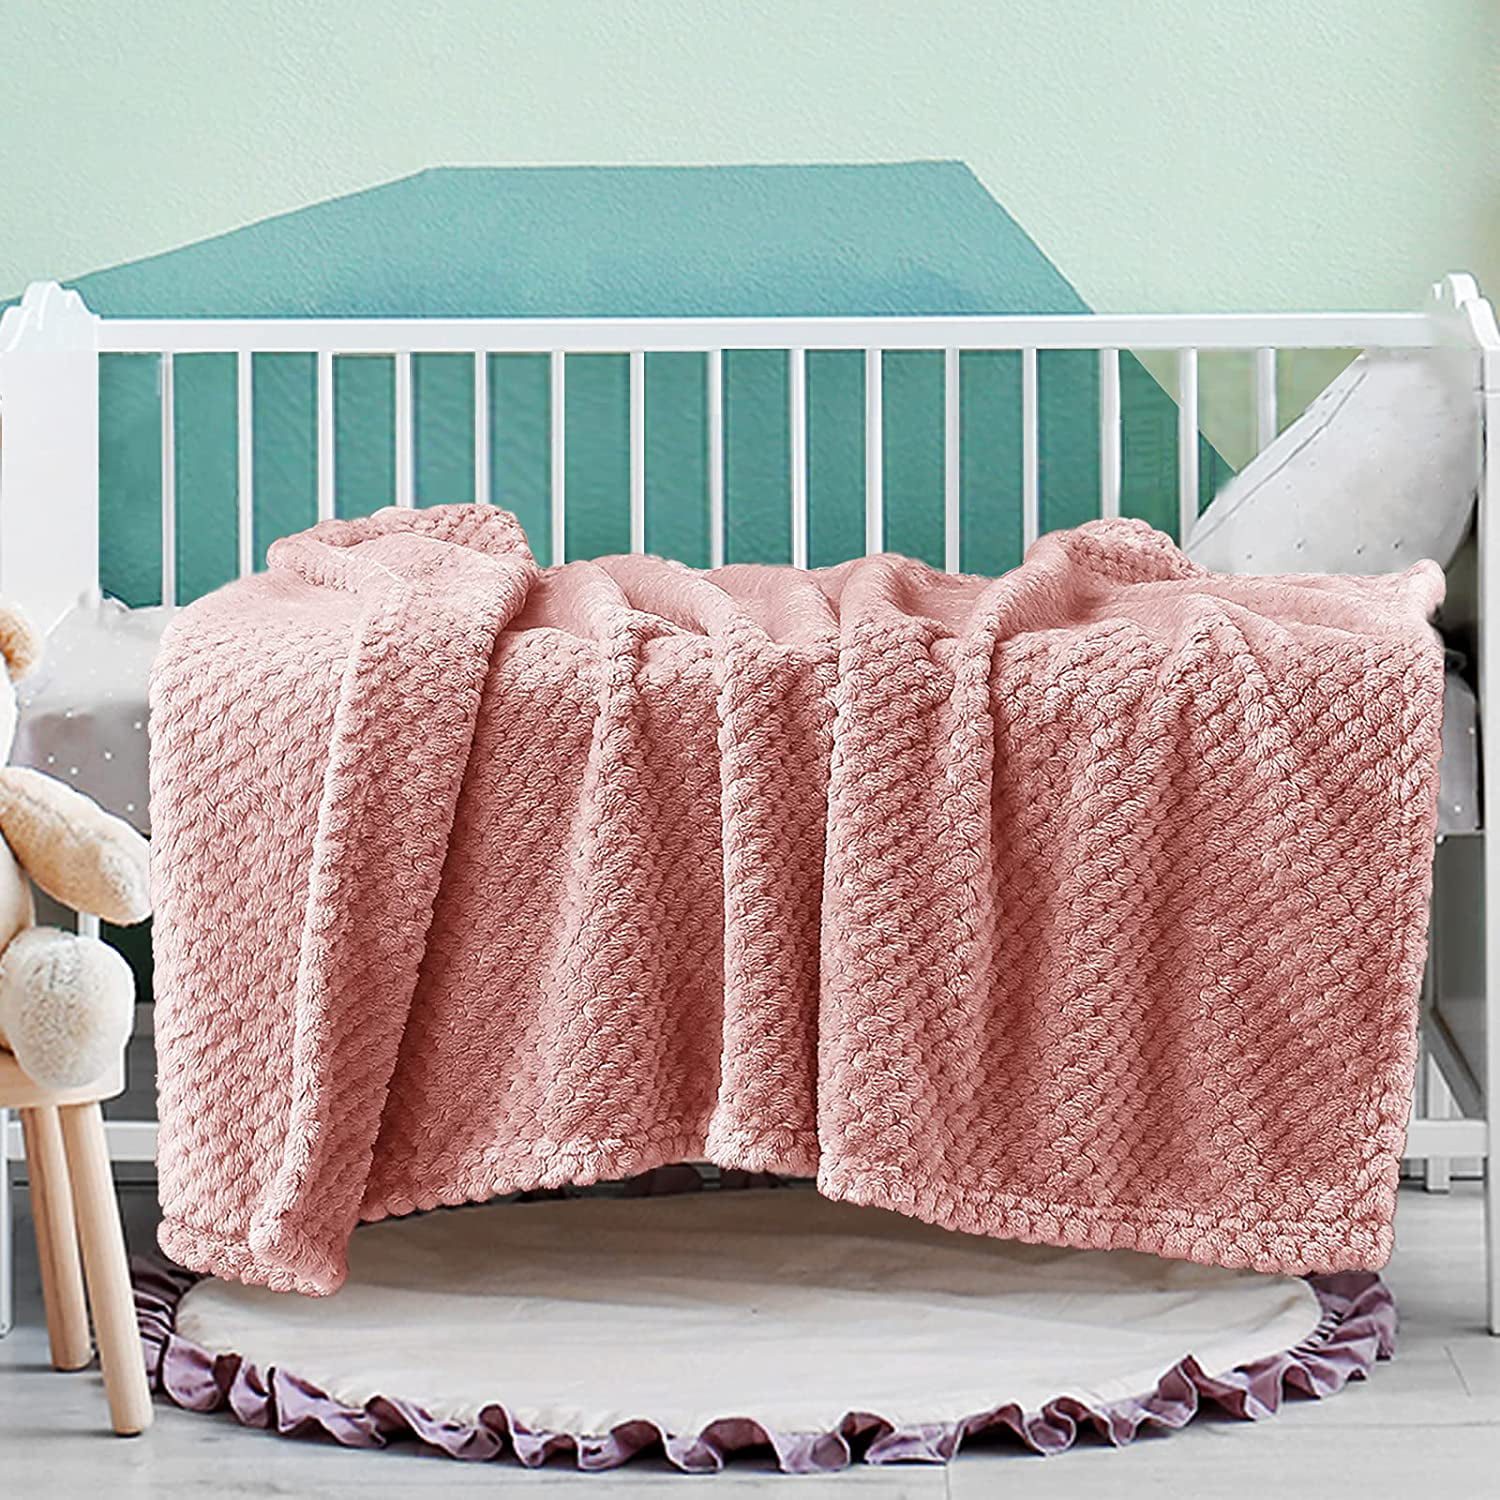 Newborn Baby SuperSoft Waffle Fleece Blanket for Pram,Travel Cot/Crib 75 x 100 